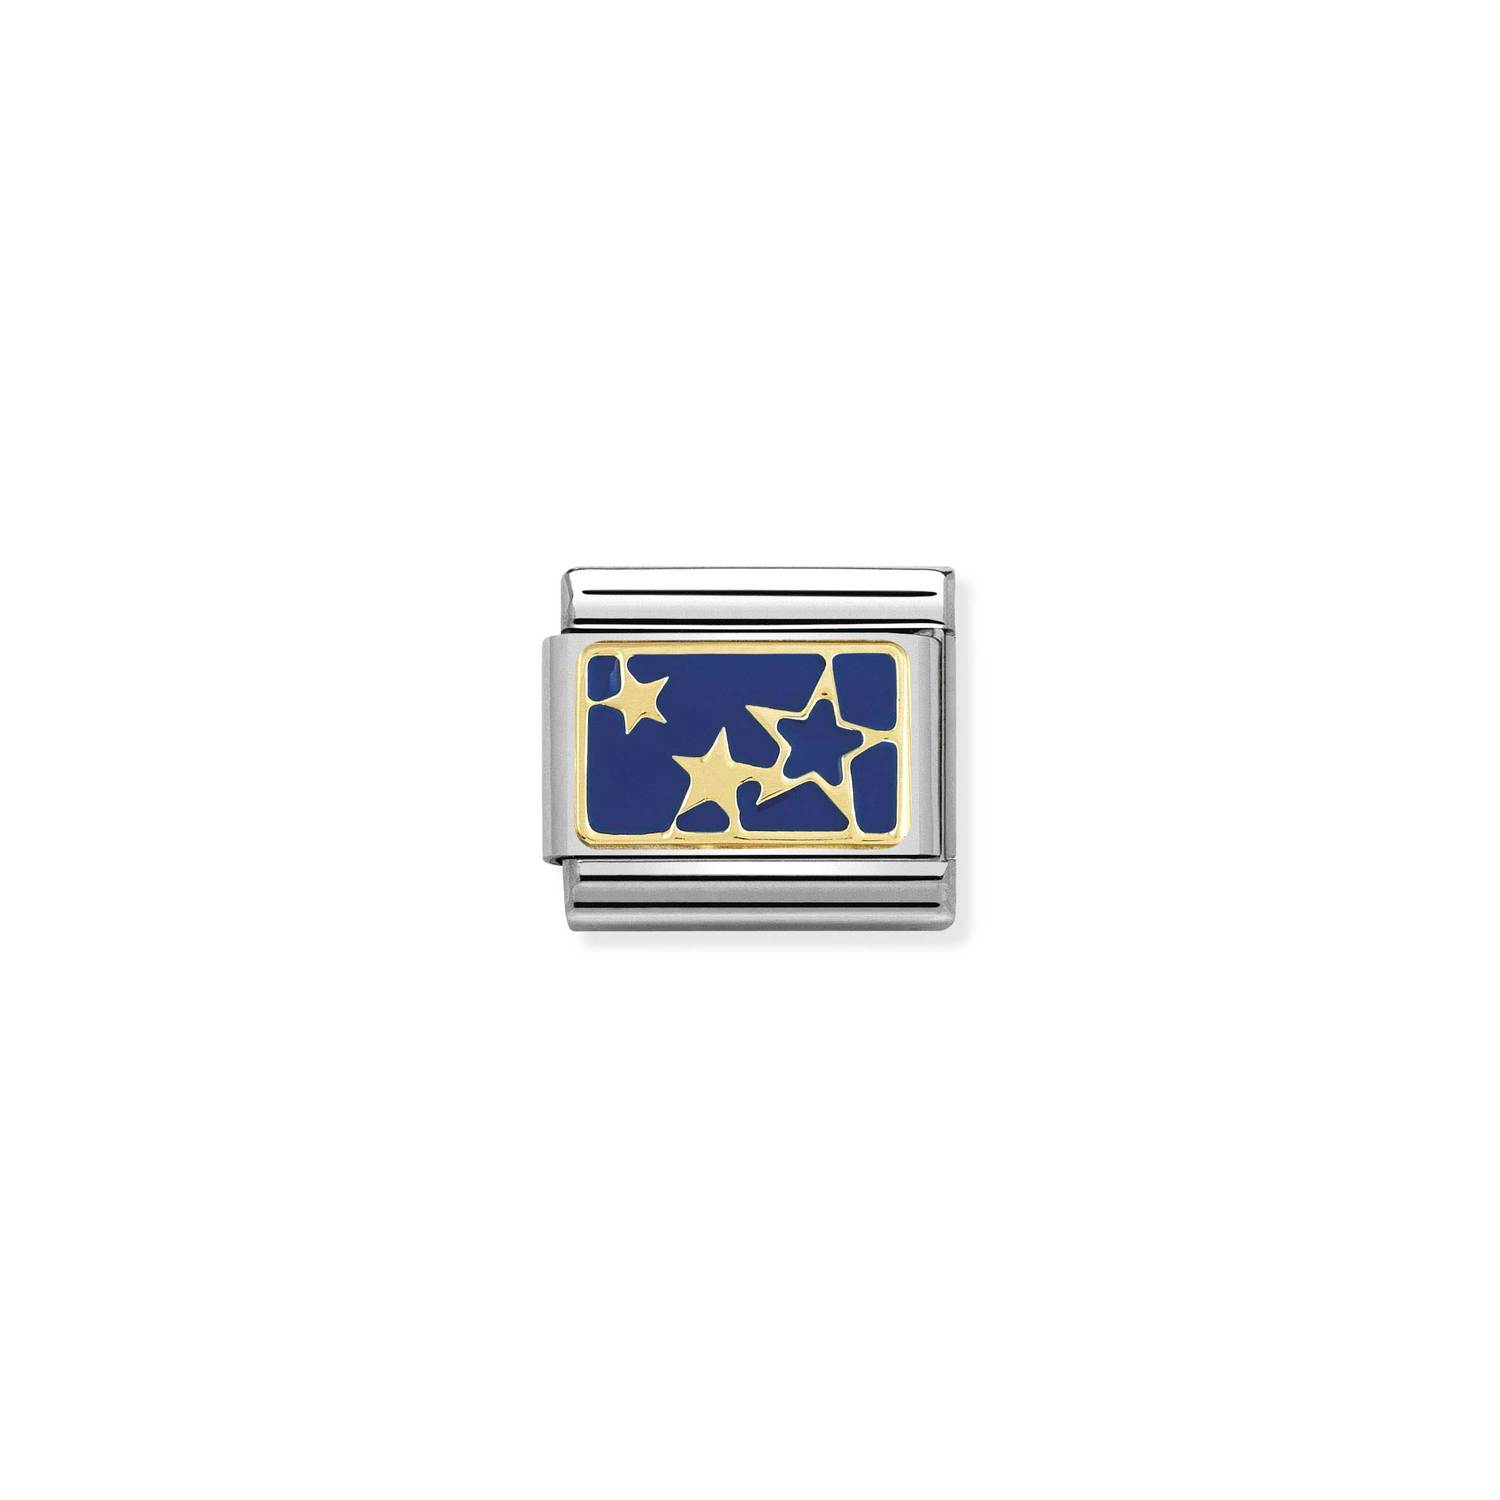 Ogniwo / link do bransolety Nomination Composable stalowe ze złotem 18k gwiazdy (OG-001934) product